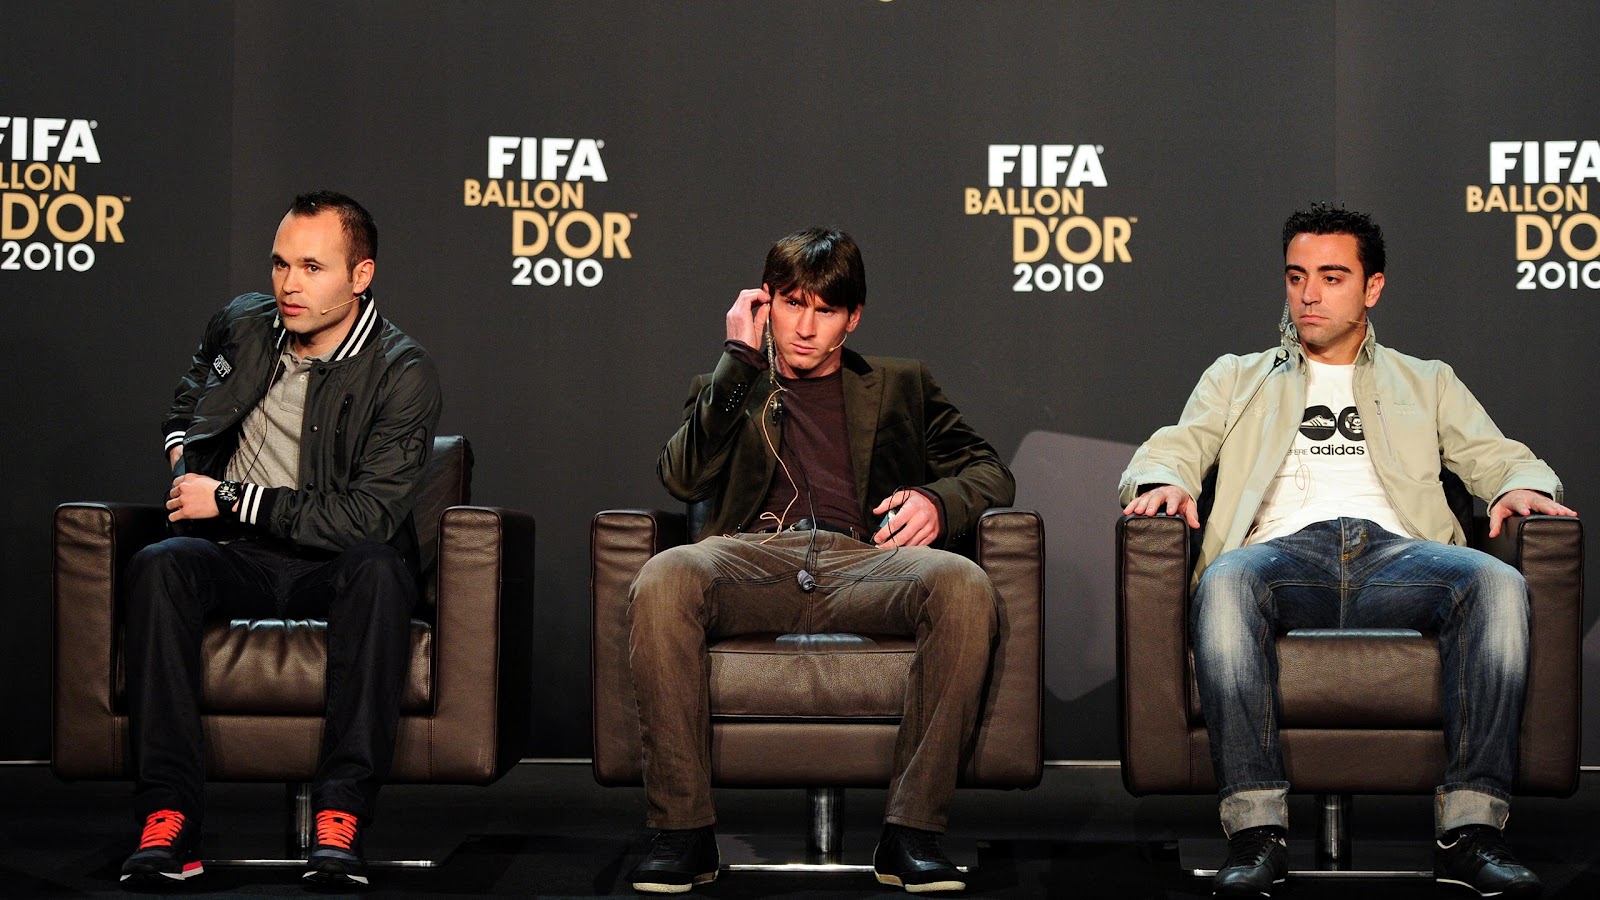 Wesley Sneijder laments 2010 Ballon d'Or snub